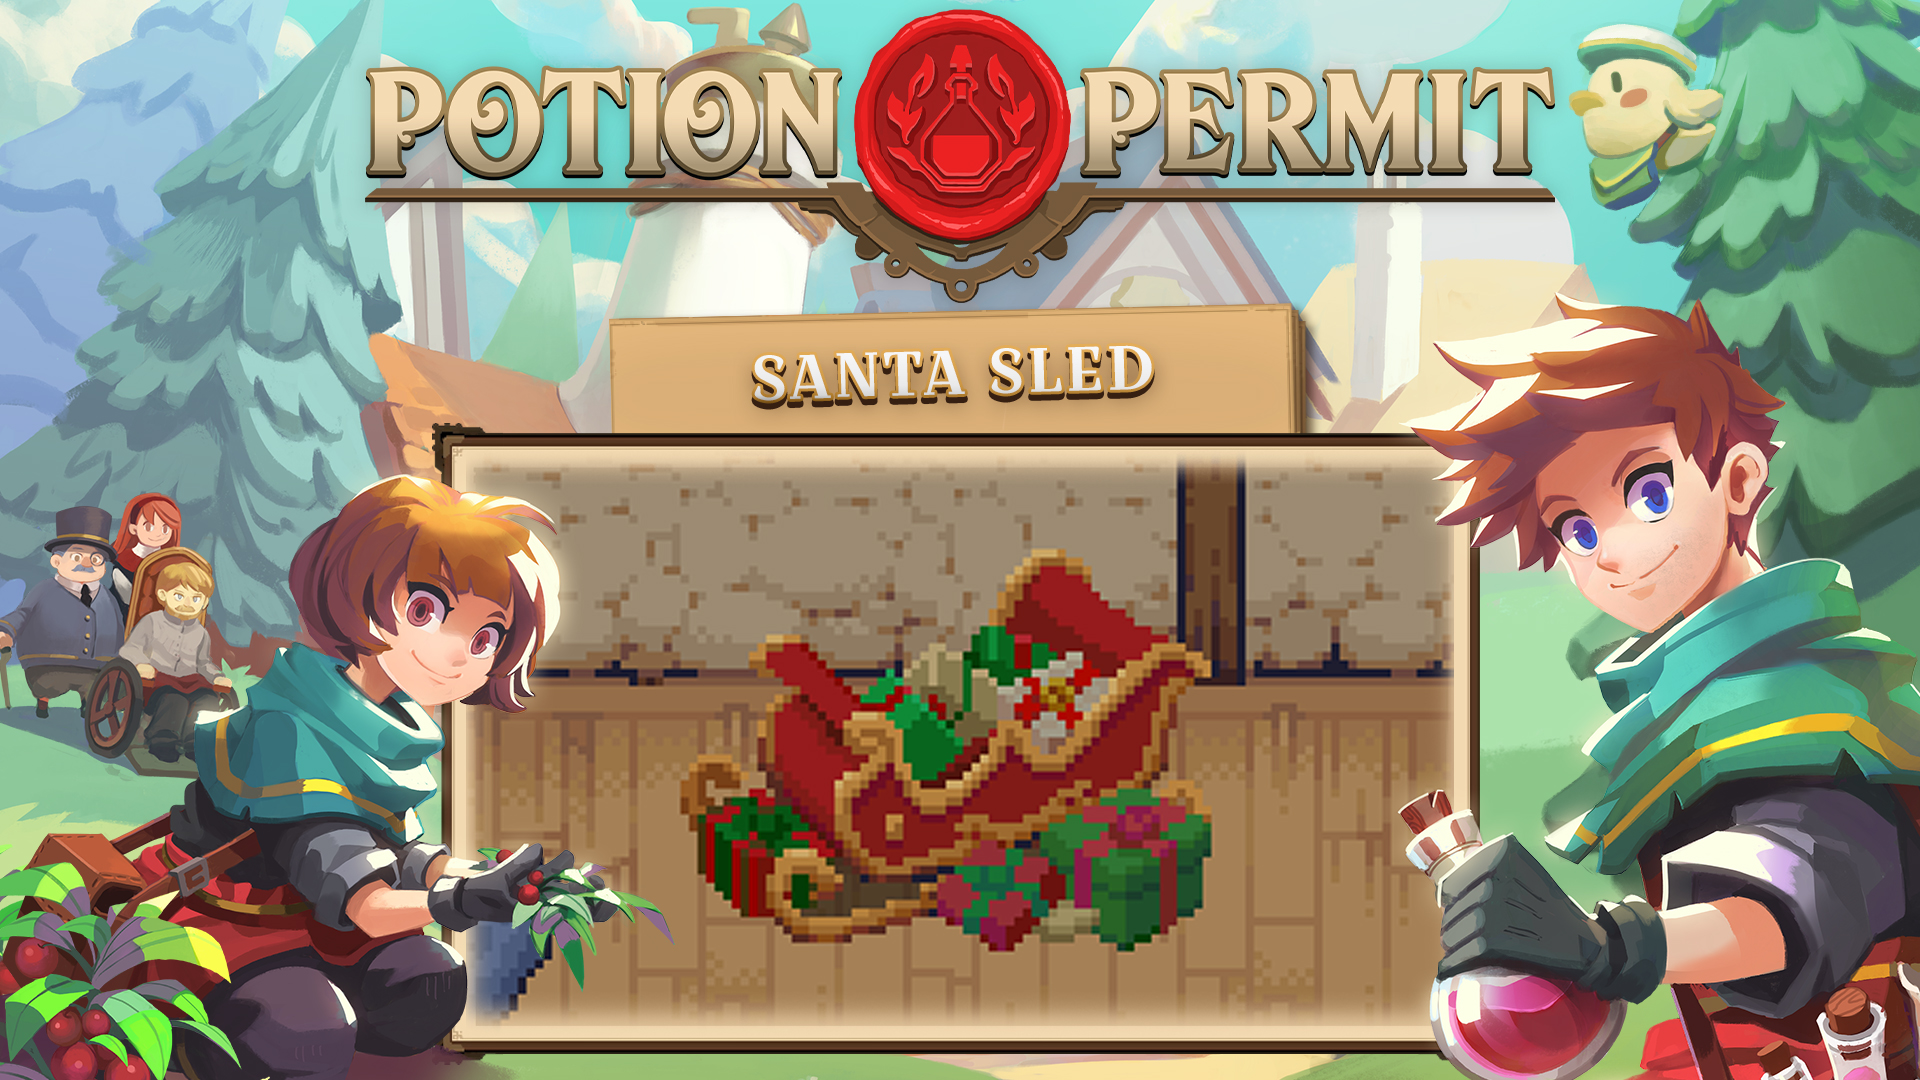 Potion Permit - Santa Sled